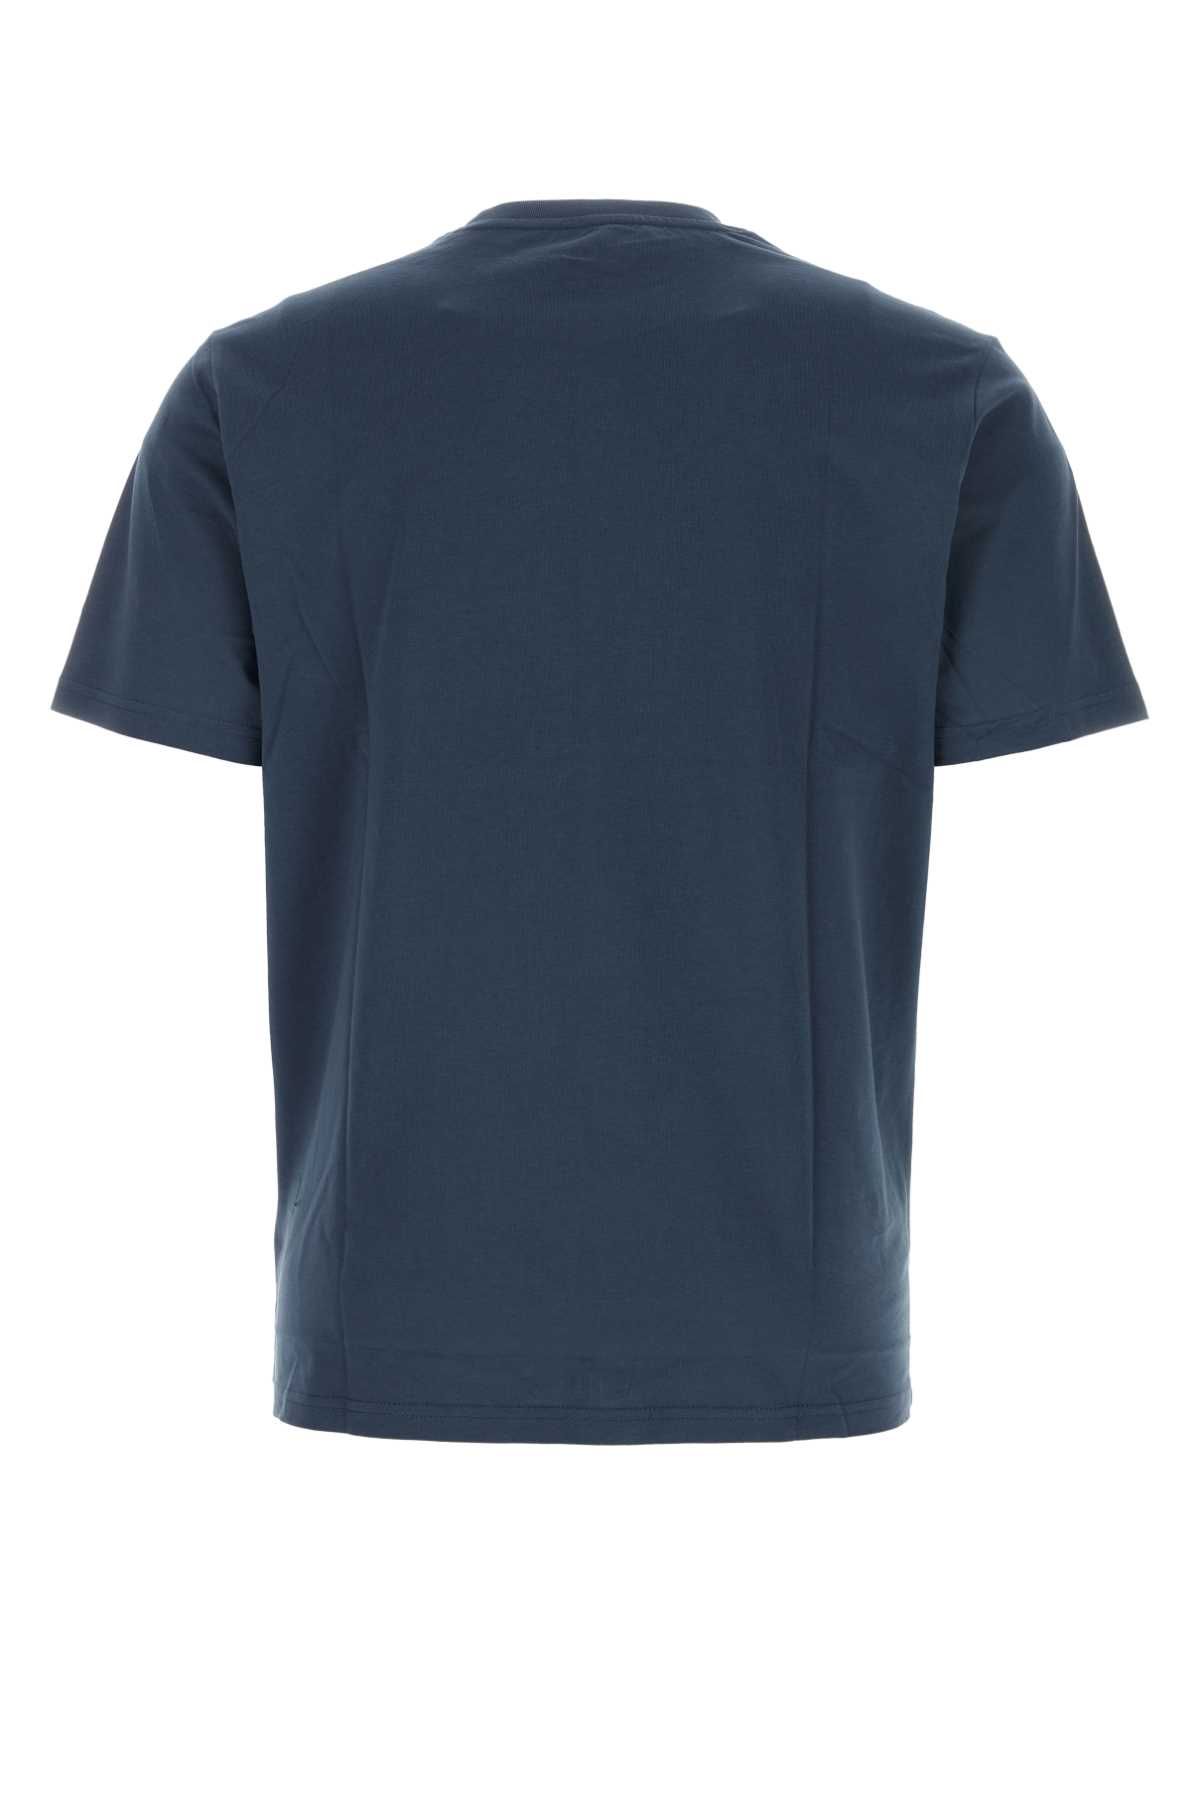 Dickies Navy Blue Cotton Mapleton T-shirt In Darkbrown